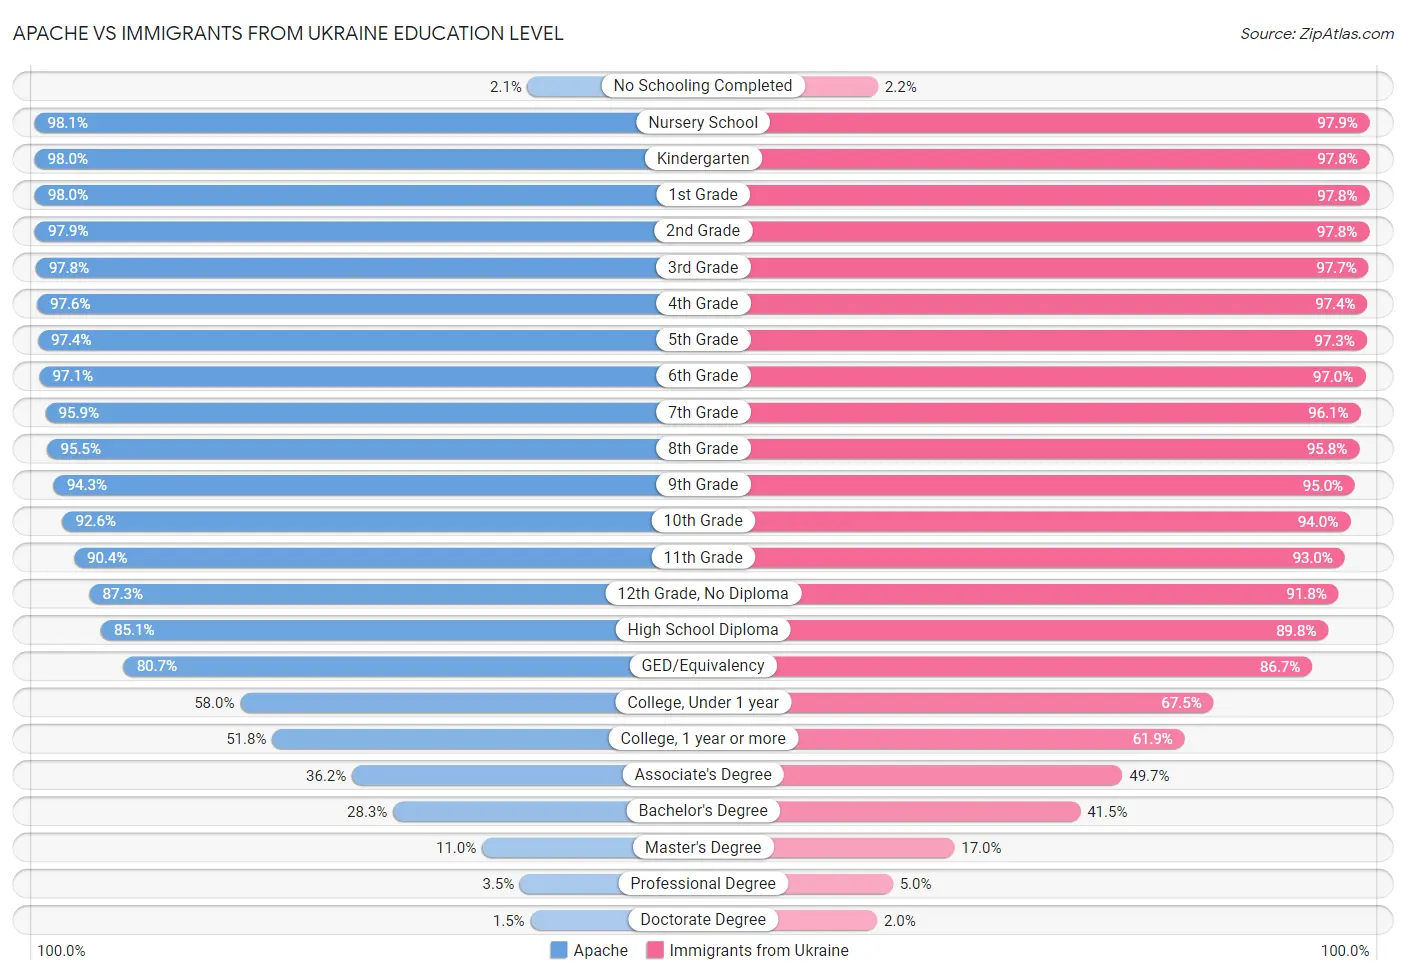 Apache vs Immigrants from Ukraine Education Level